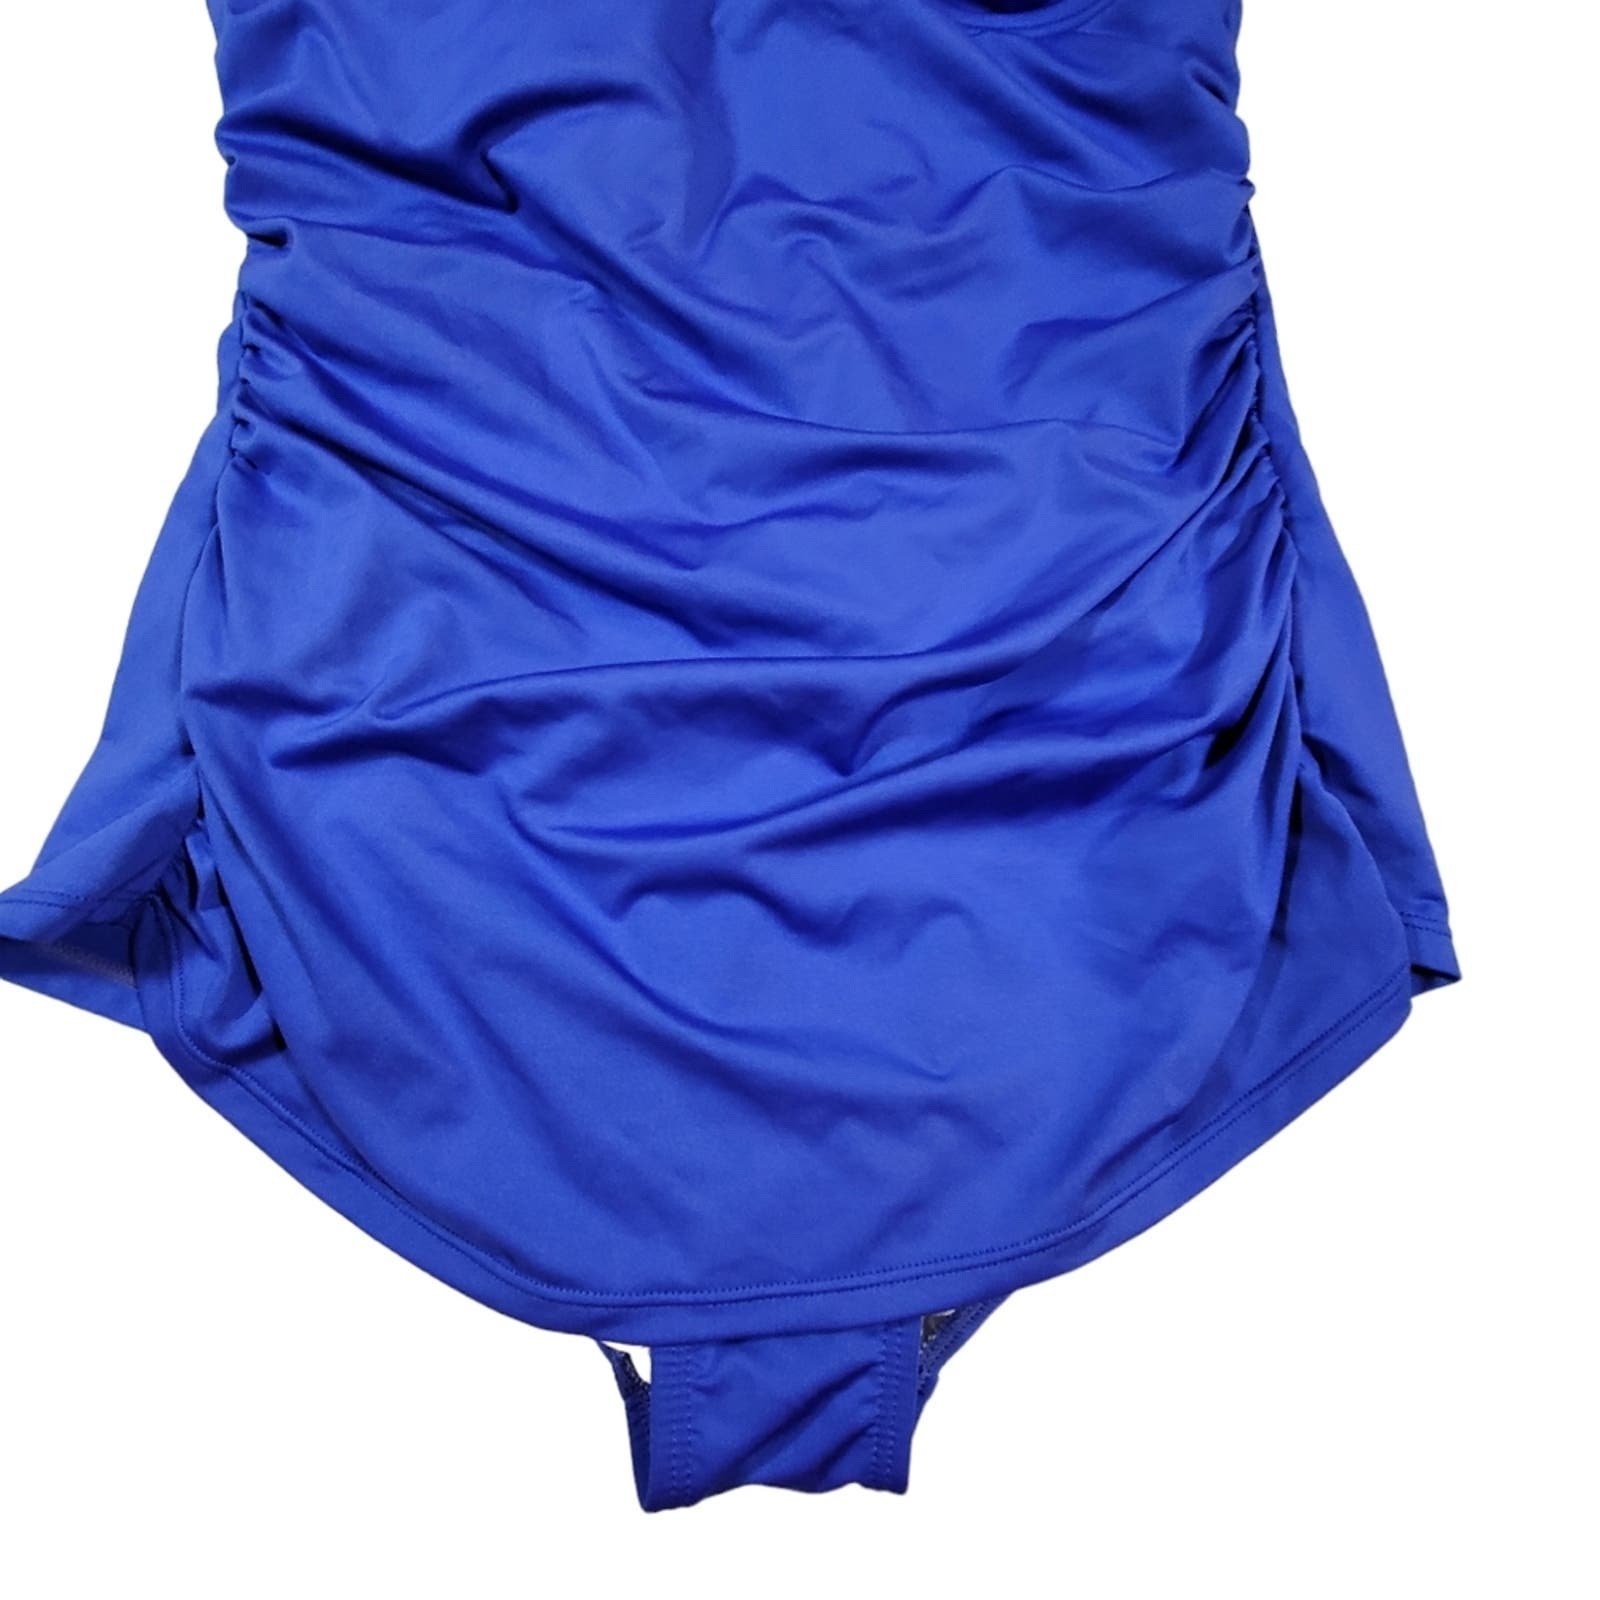 floor price Jantzen One Piece Blue Twist Top Sleeveless Swimdress Bathing Suit sz 12 I8Mfzq6tL Wholesale